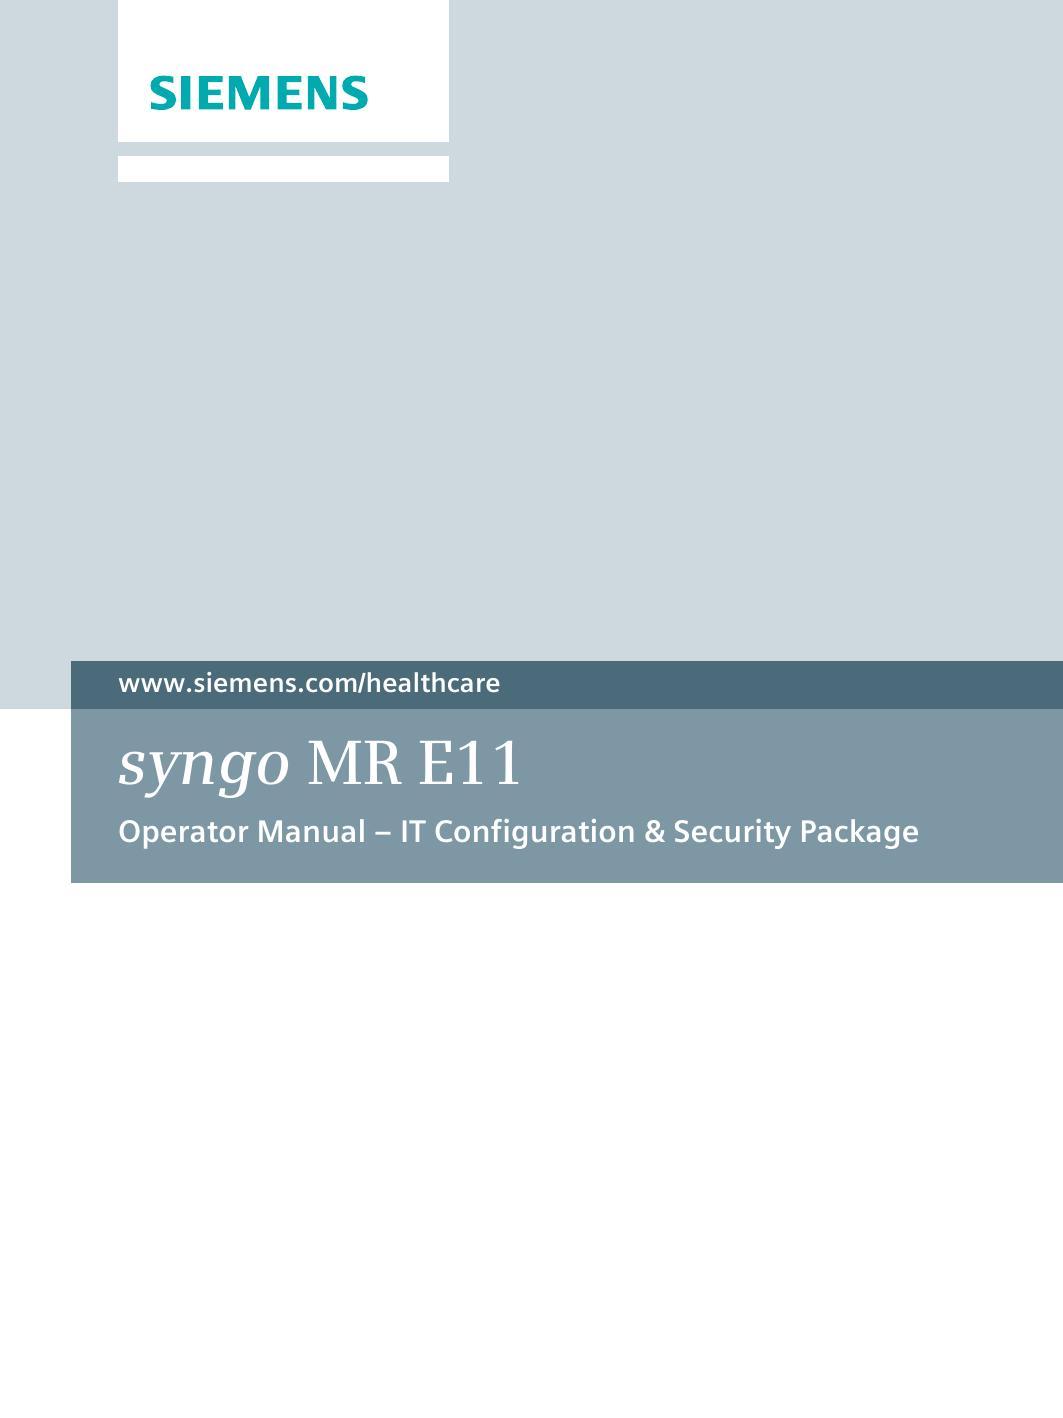 syngo-mr-e11-operator-manual-it-configuration-security-package.pdf